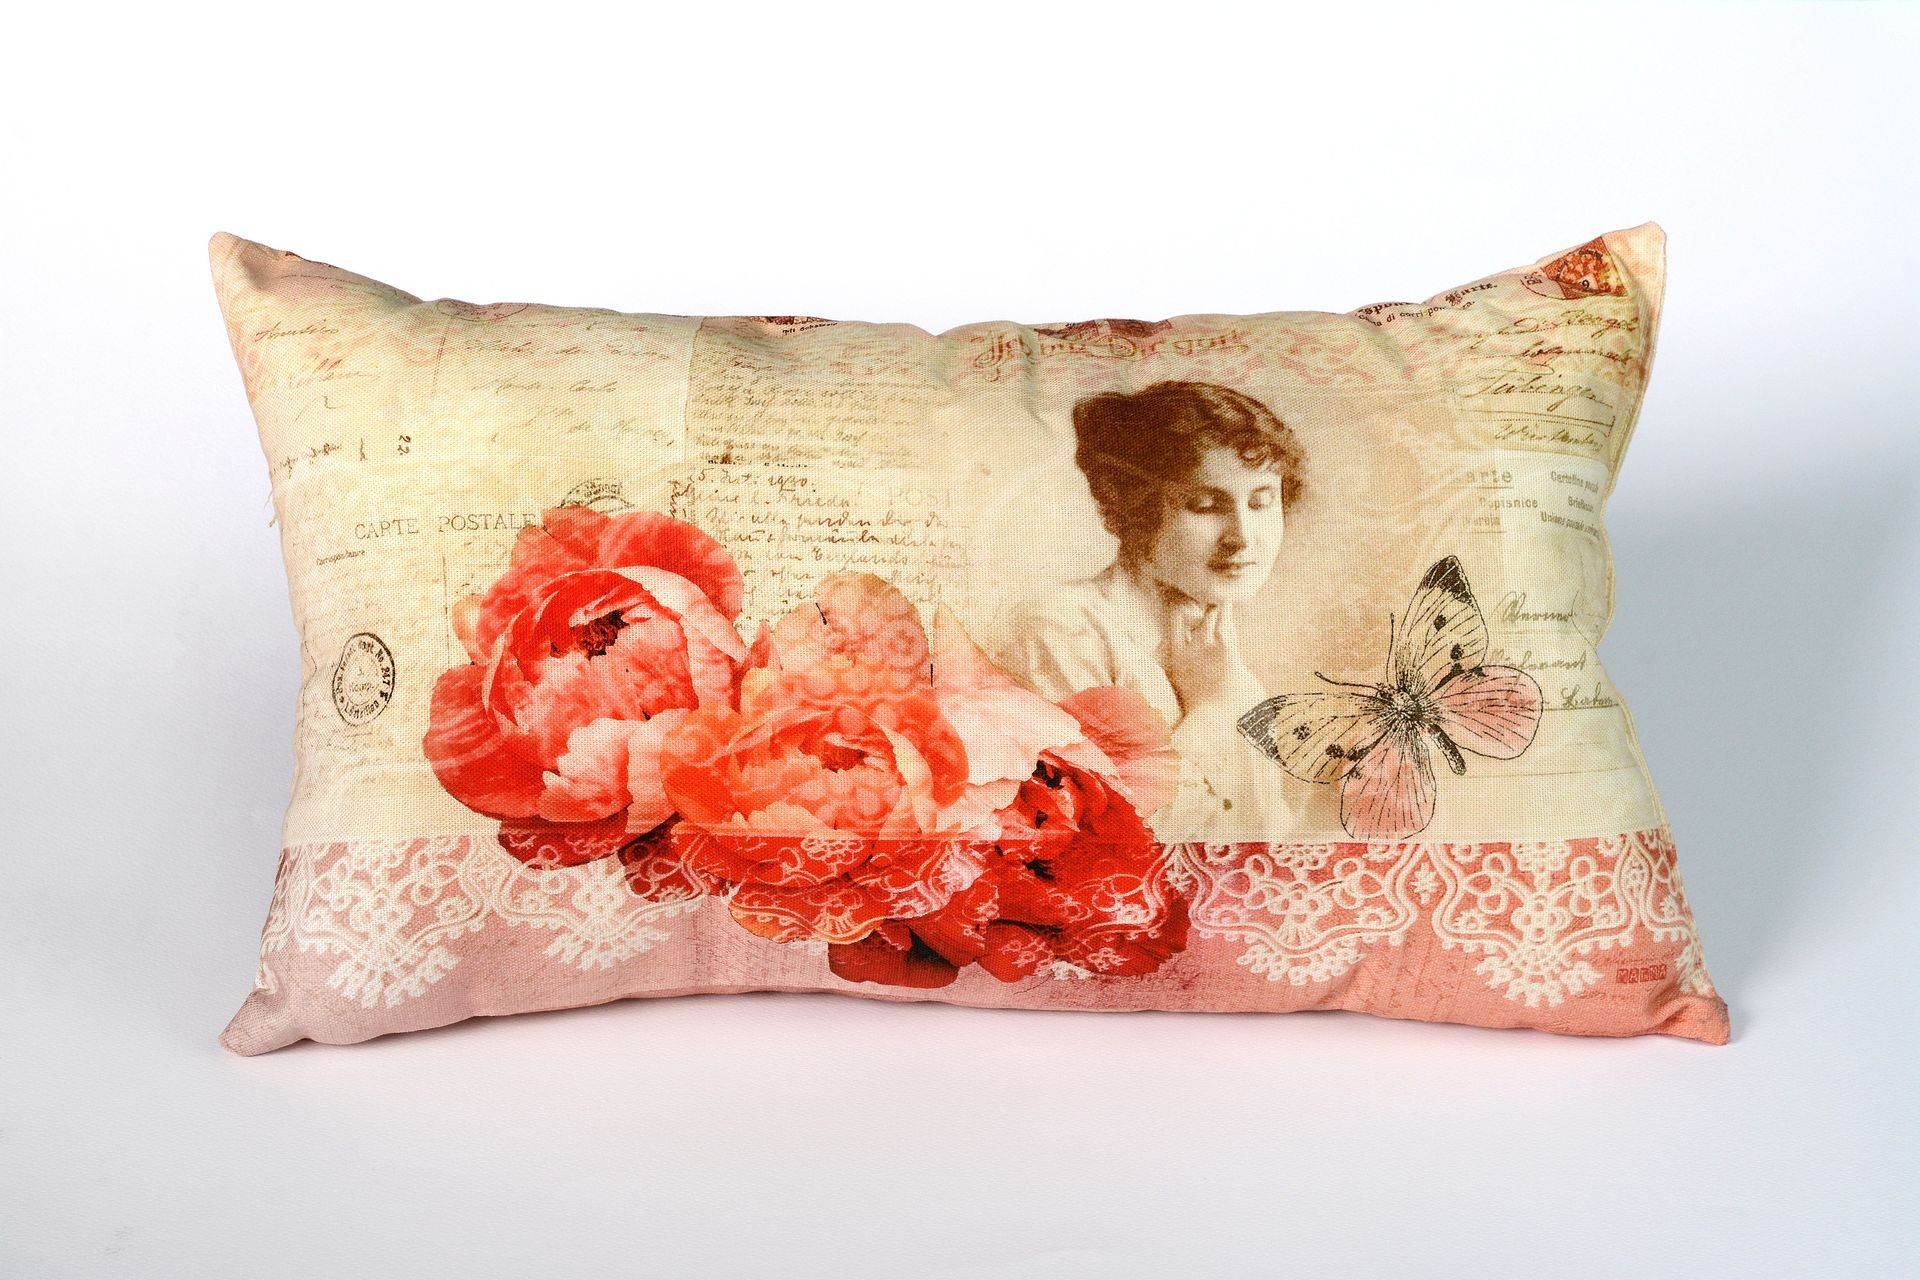 Decorative romance pillow